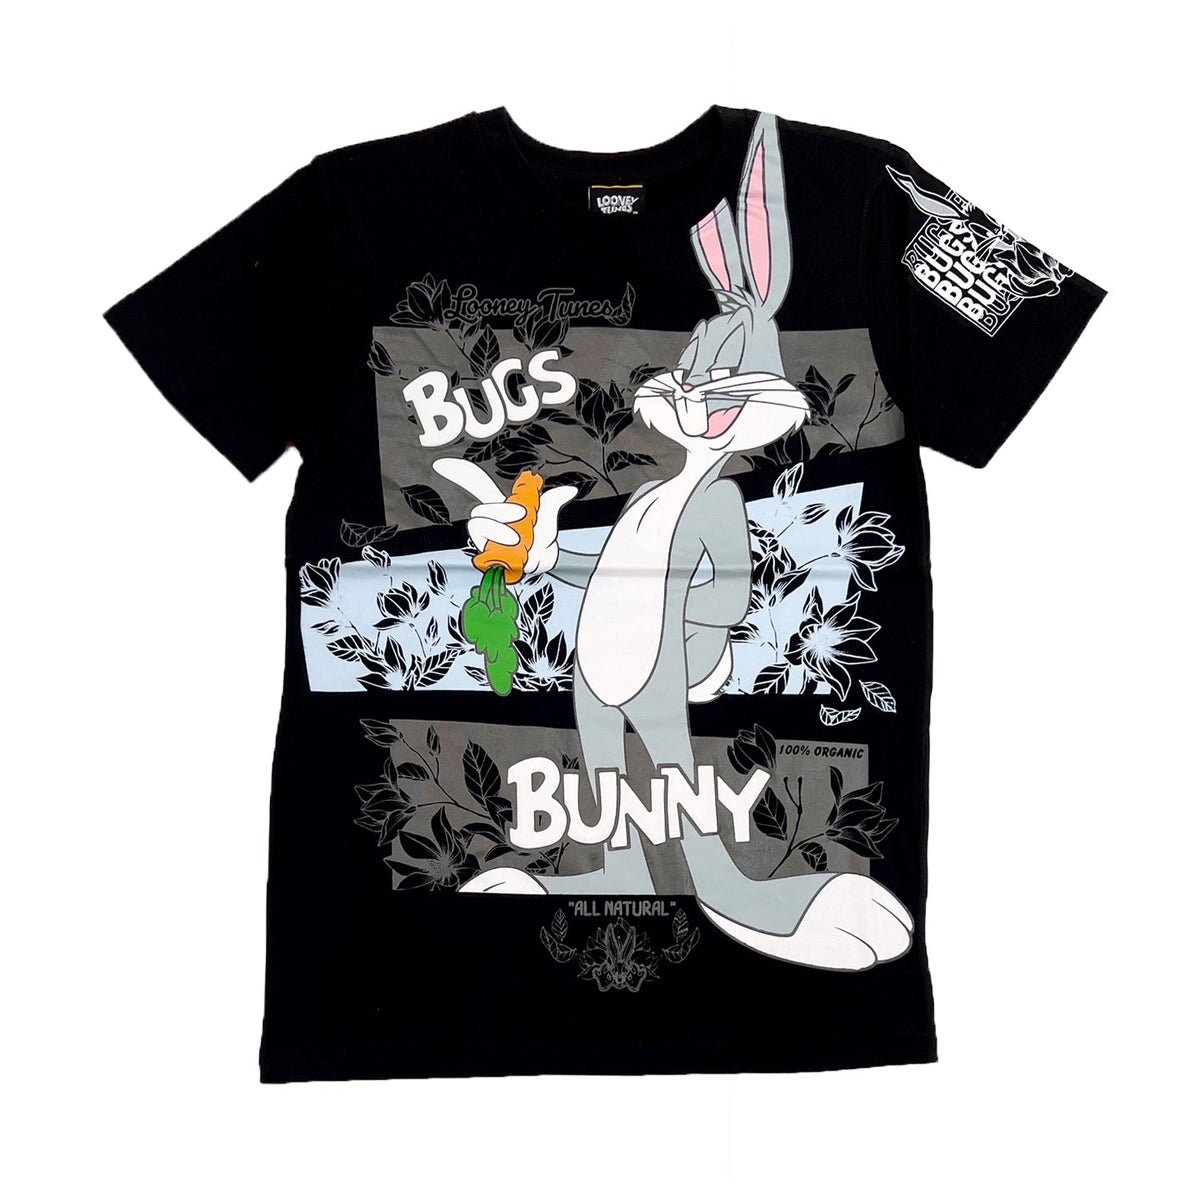 Looney Tunes Bugs Bunny Tee for (Black) $30 $16.99 / 2